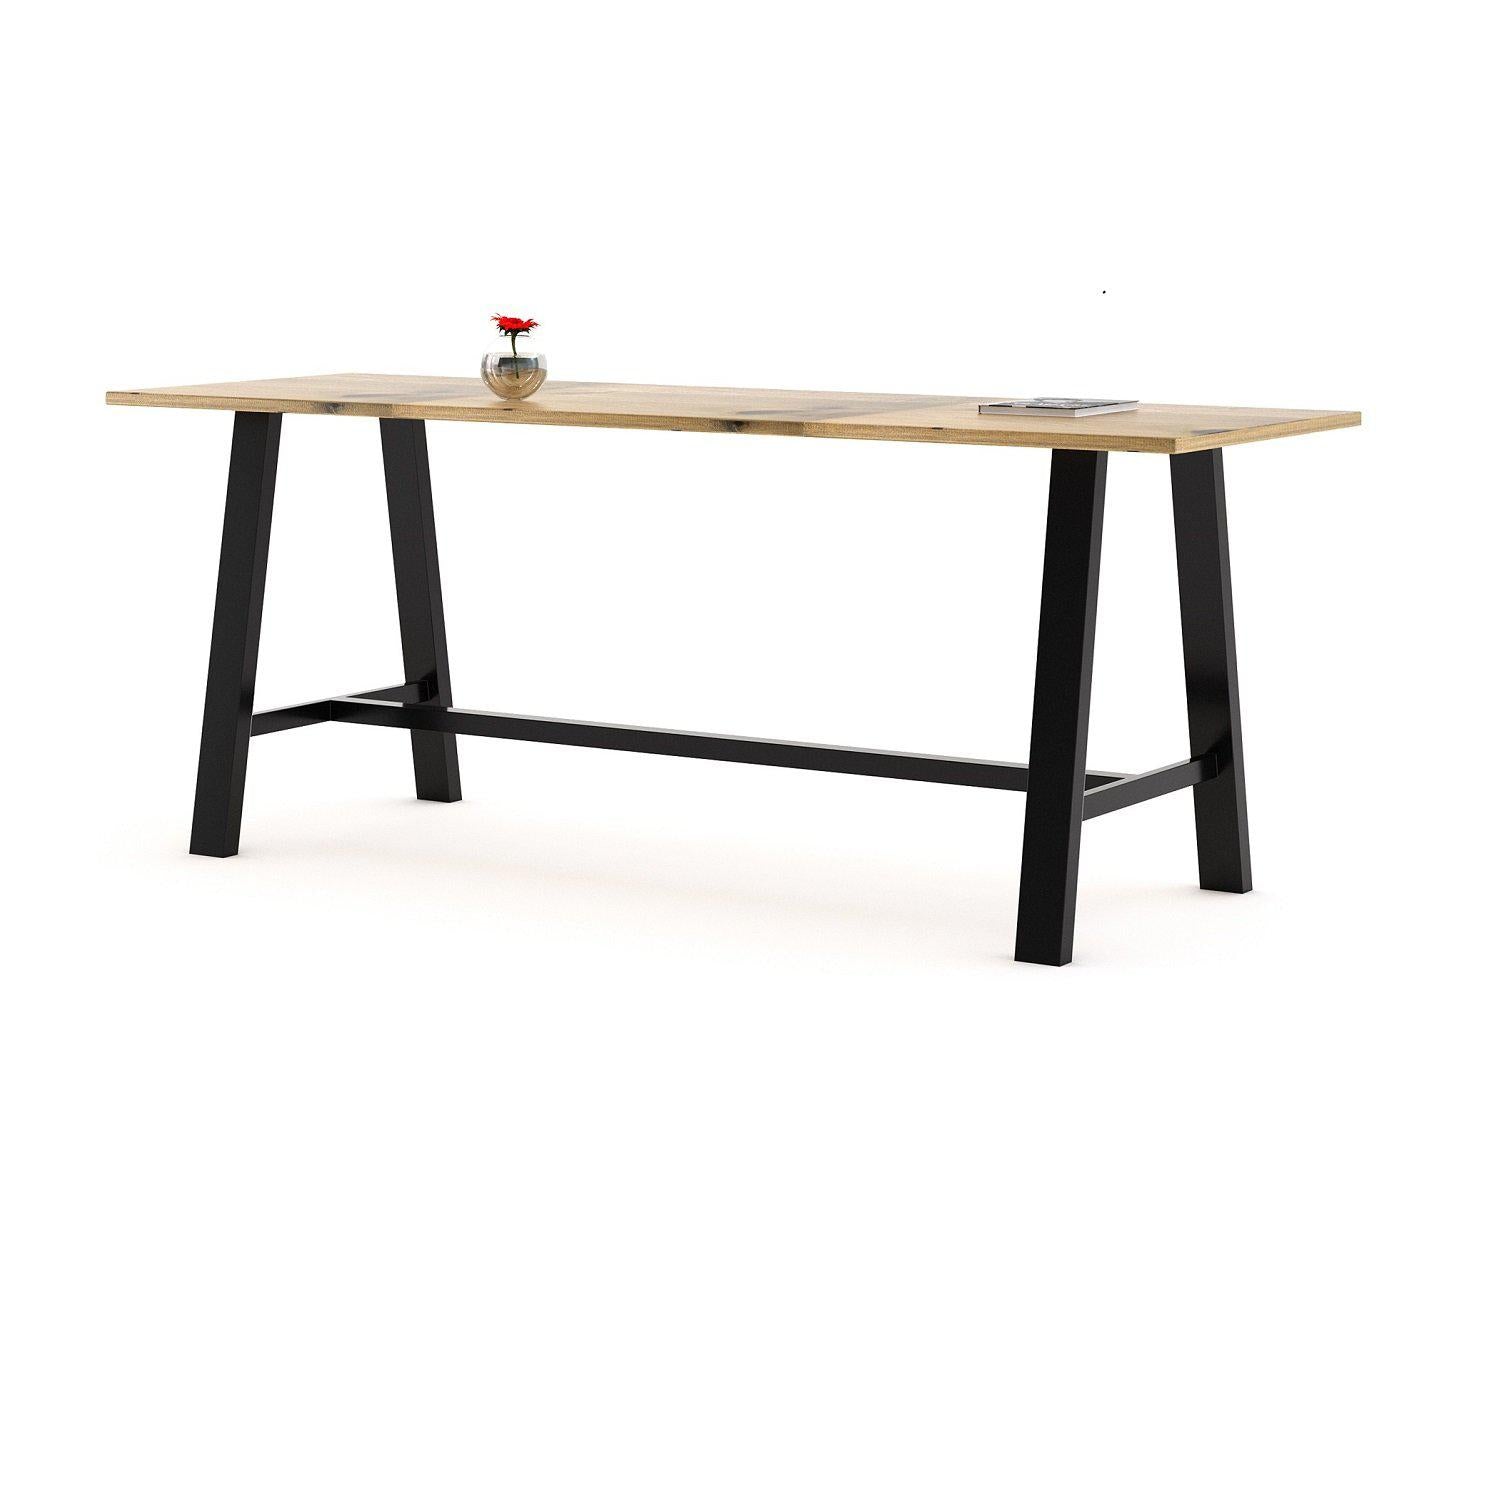 Midtown Table, Bar Height, 42" x 108" x 41"H, Urban Loft Solid Wood Top, 96" Base